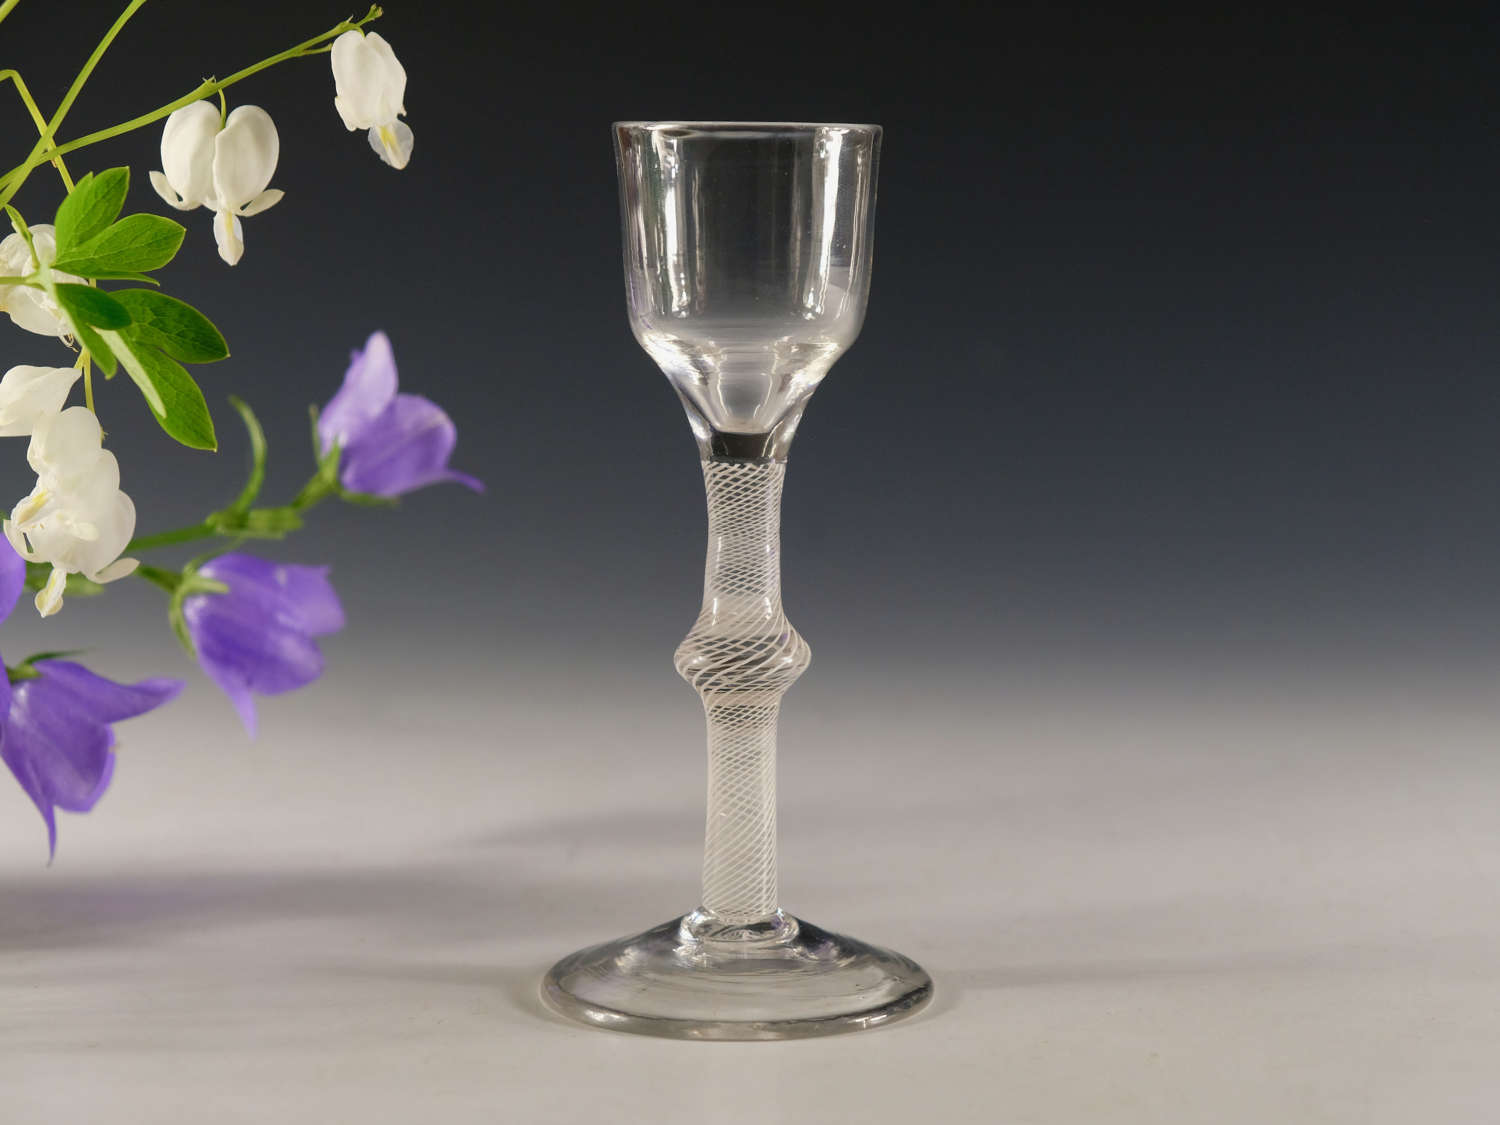 Antique glass - Multi spiral opaque twist wine glass English c1765